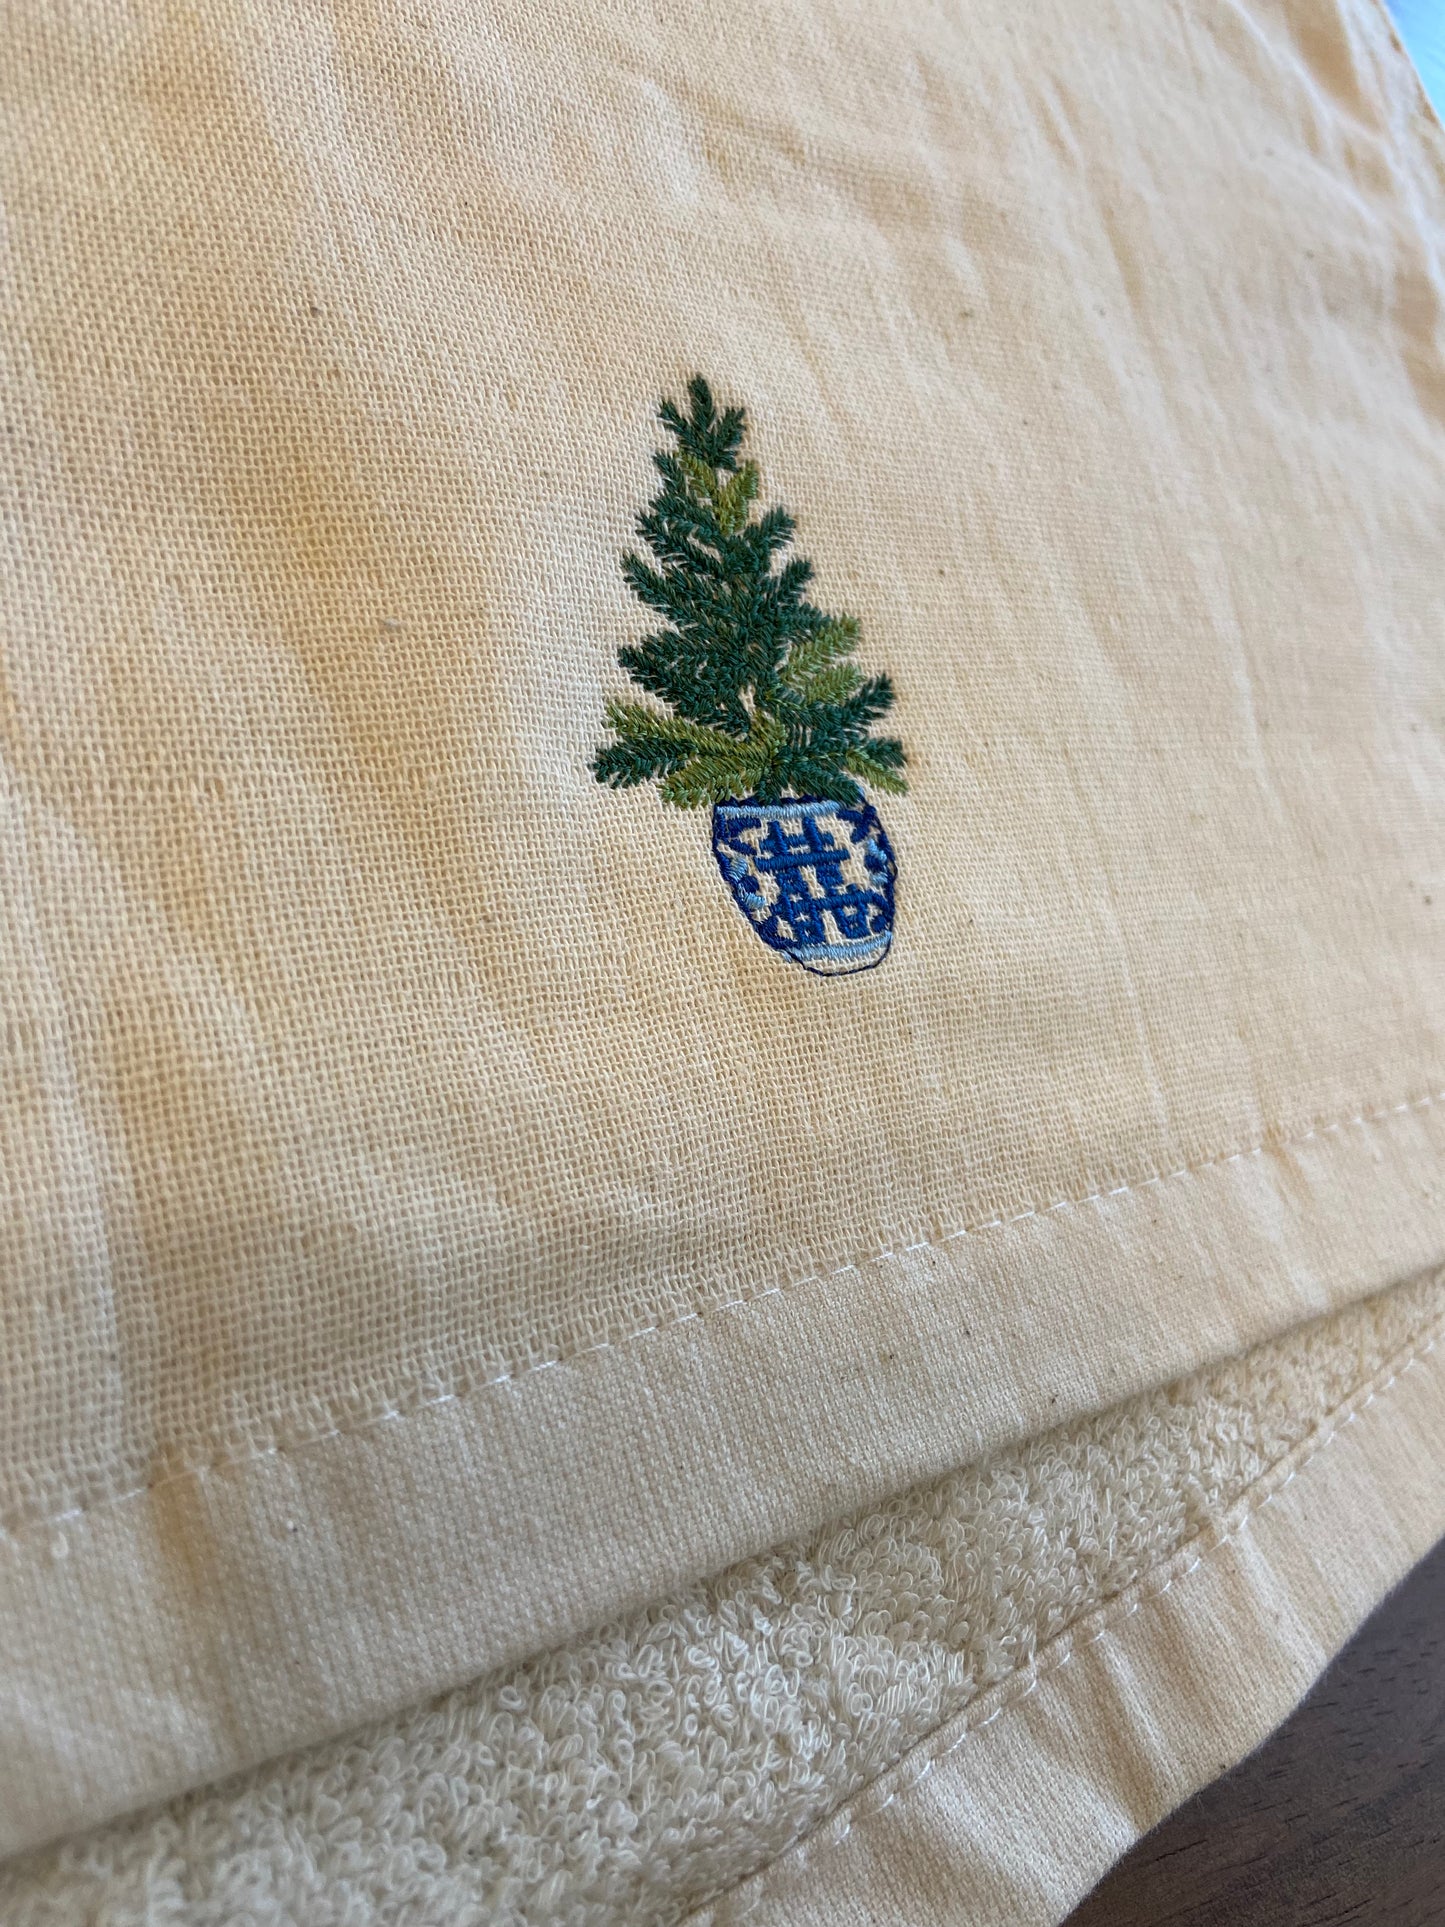 New🎄Christmas Tree Embroidered Towel